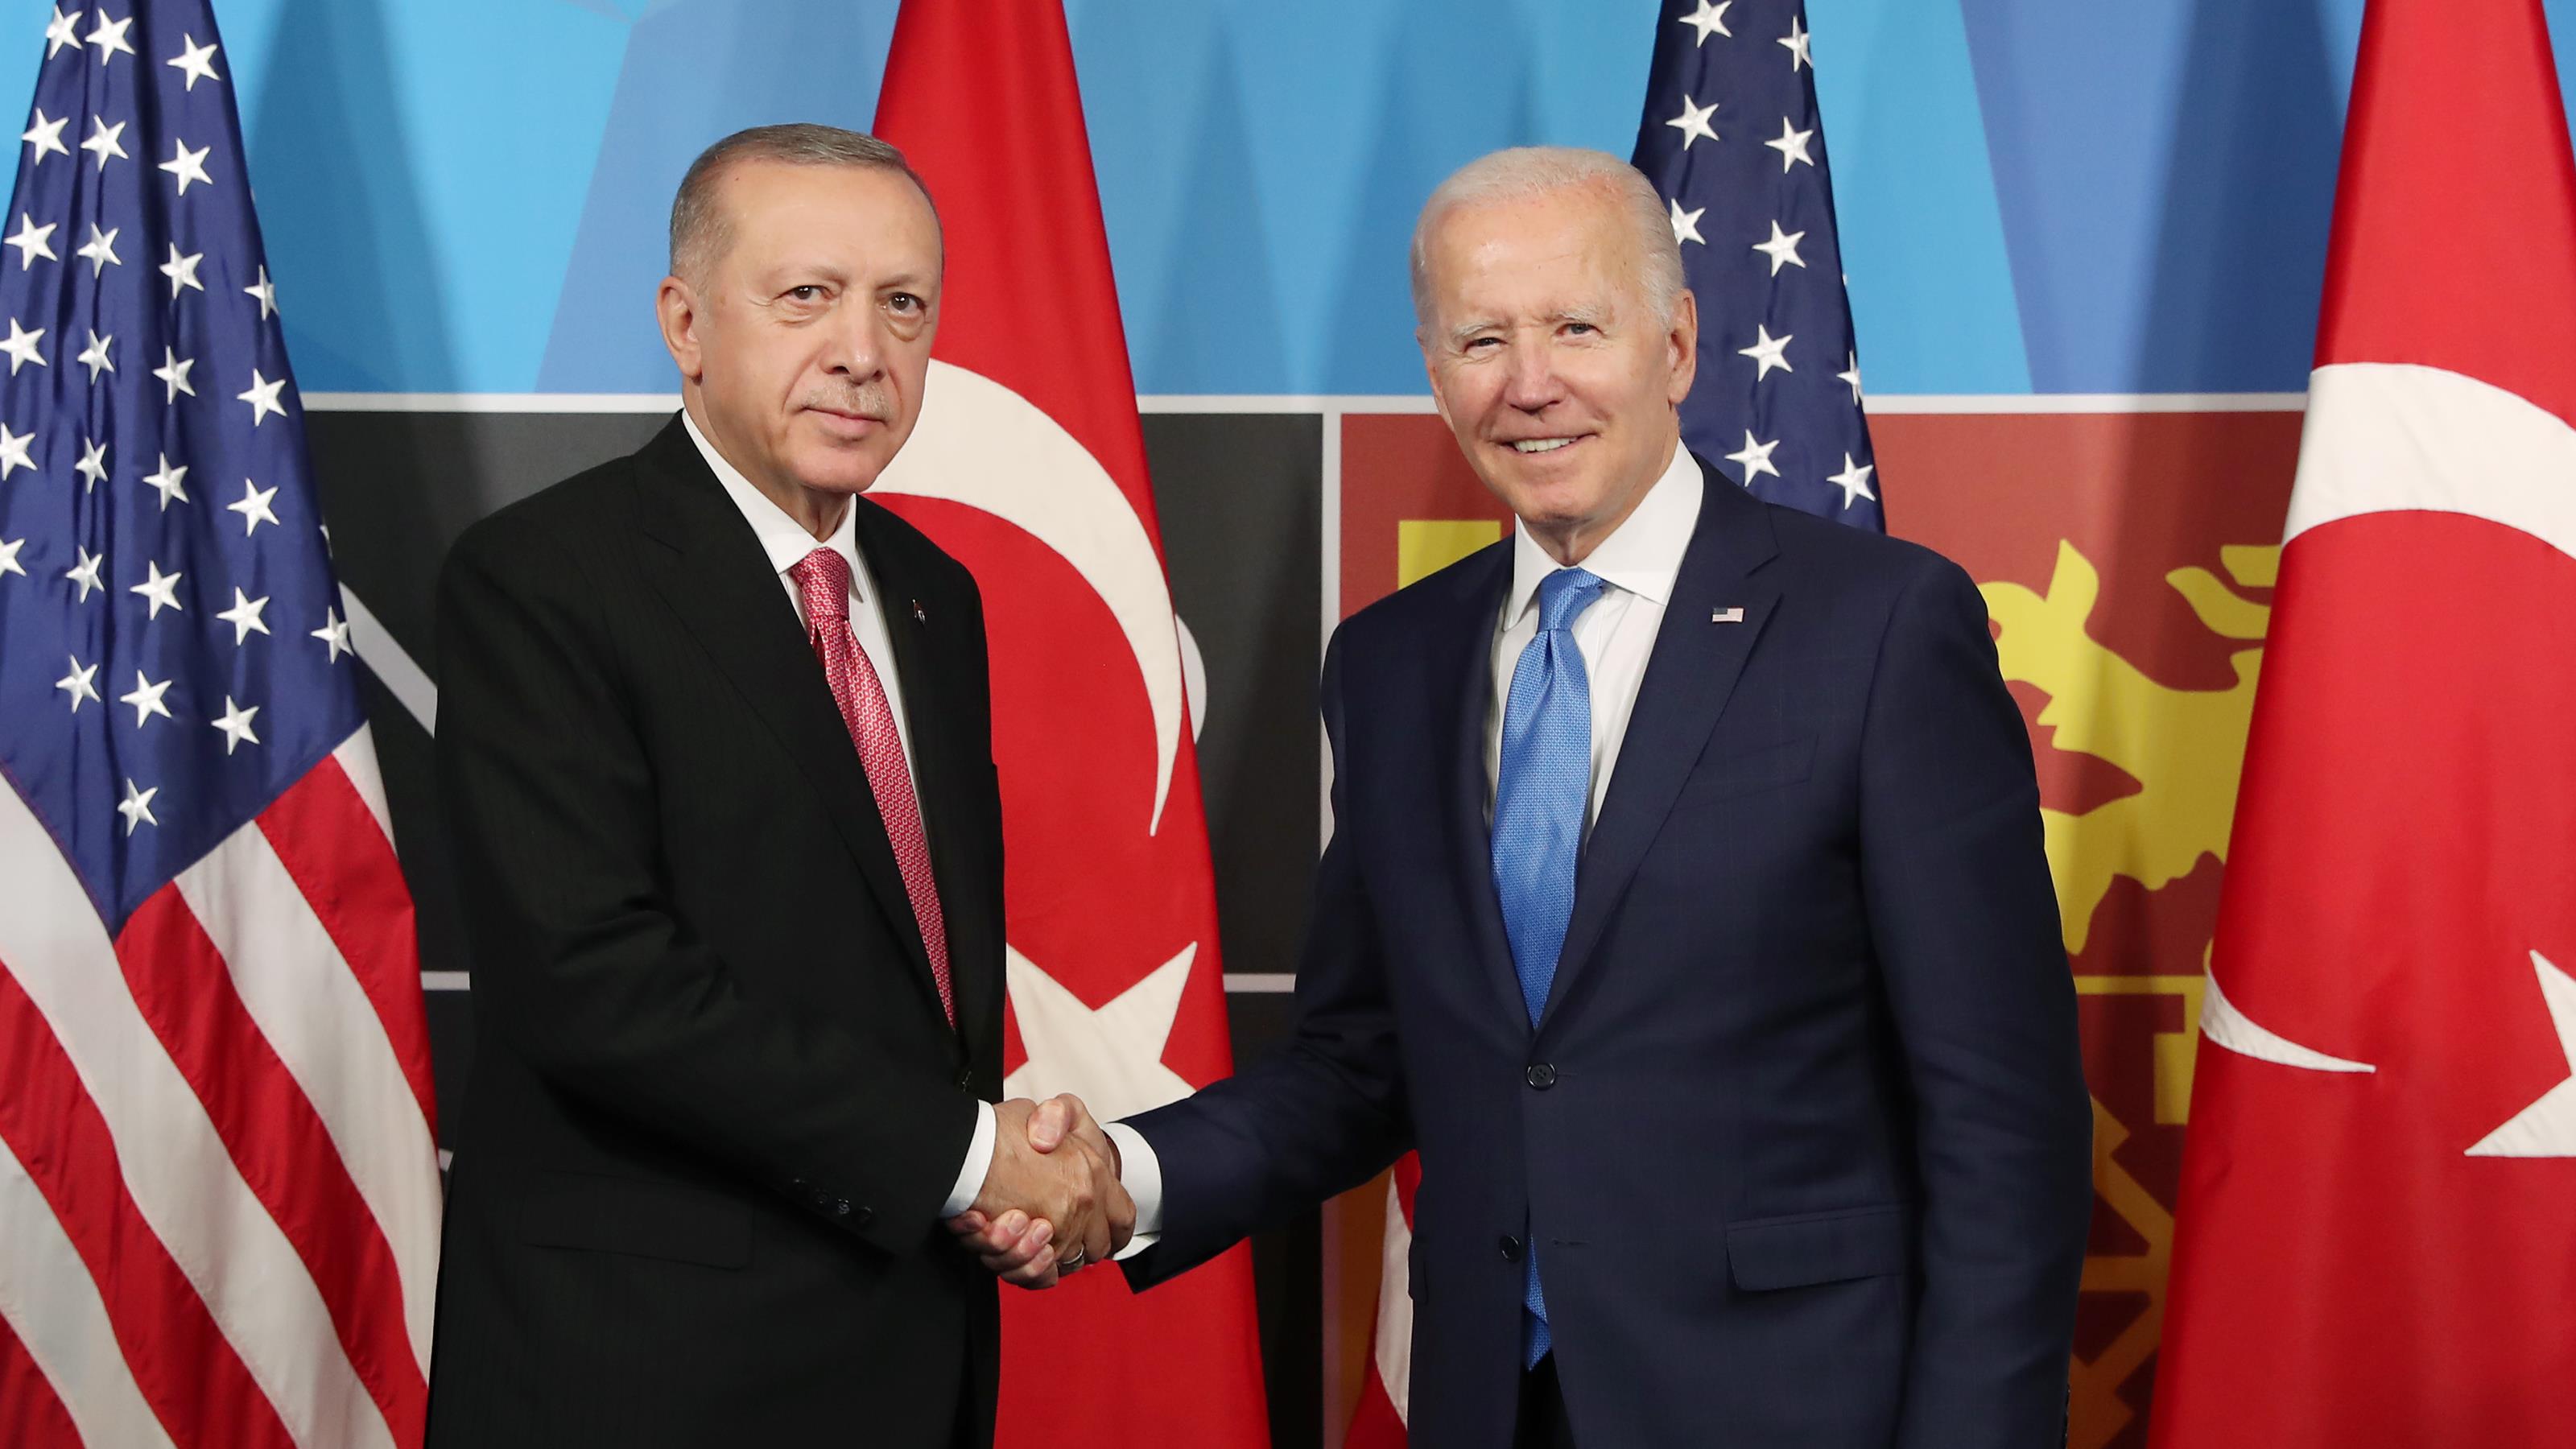 Turkish President Erdogan meets U.S. President Biden on the sidelines of the NATO Summit in Spain